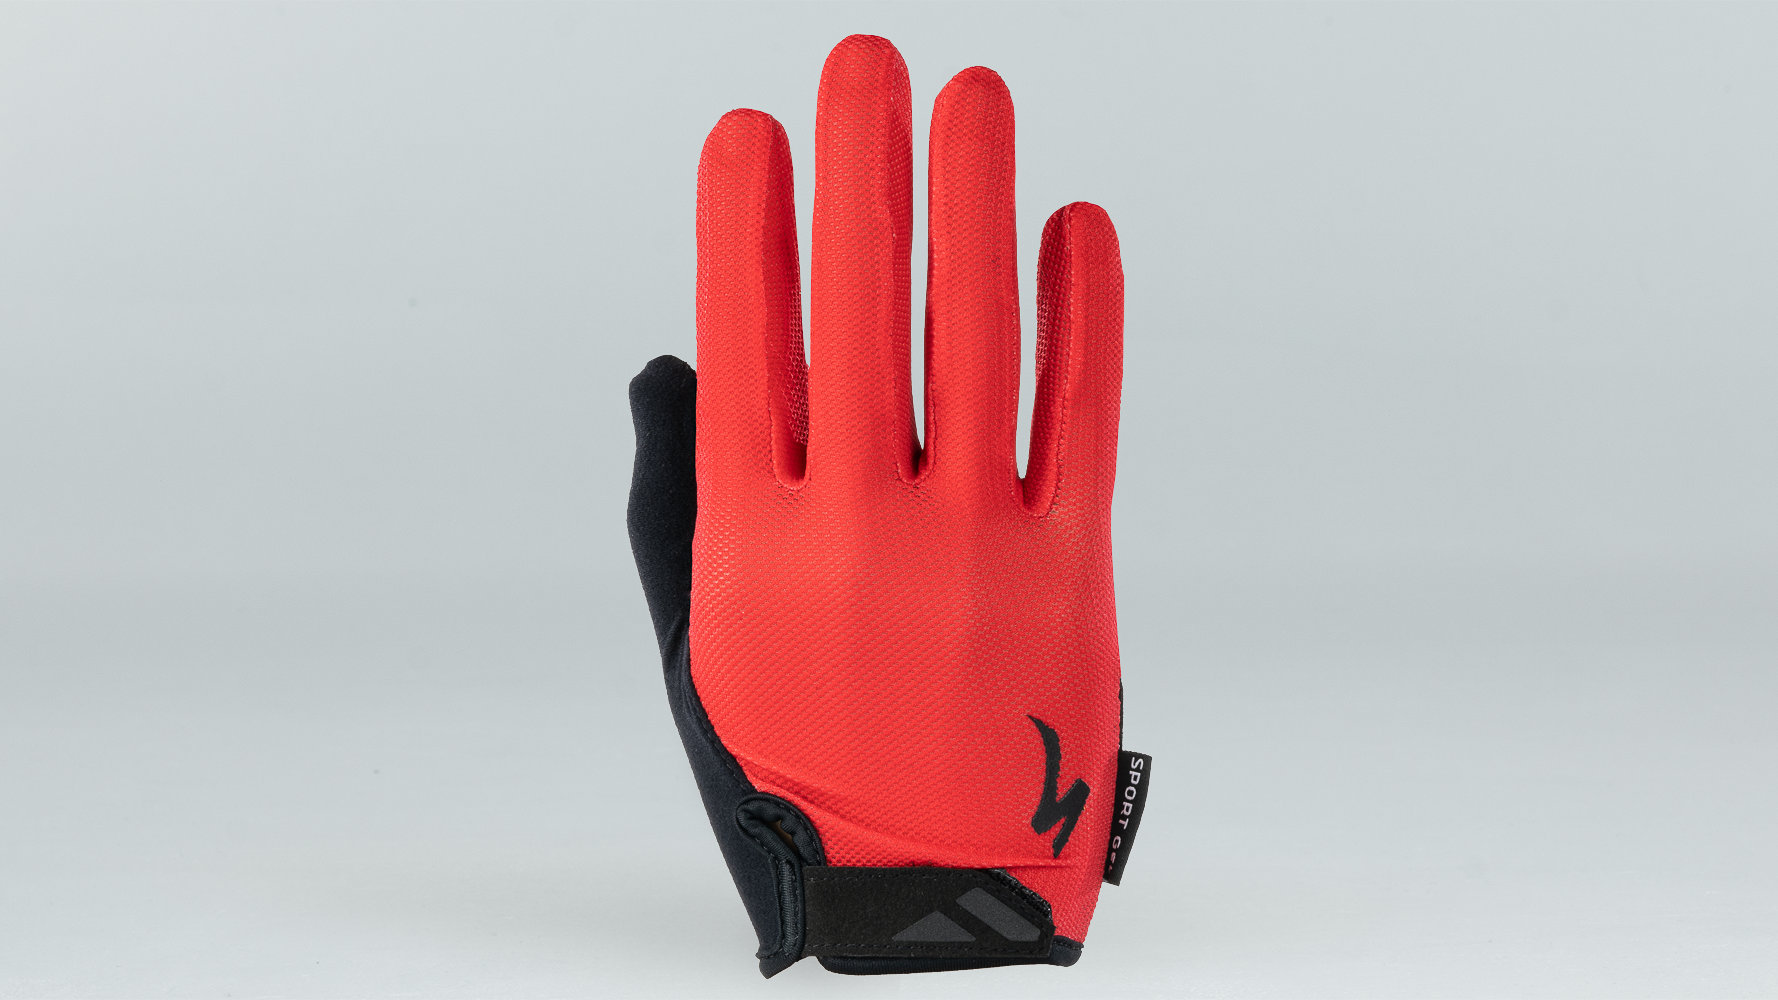 specialized bike gloves men's